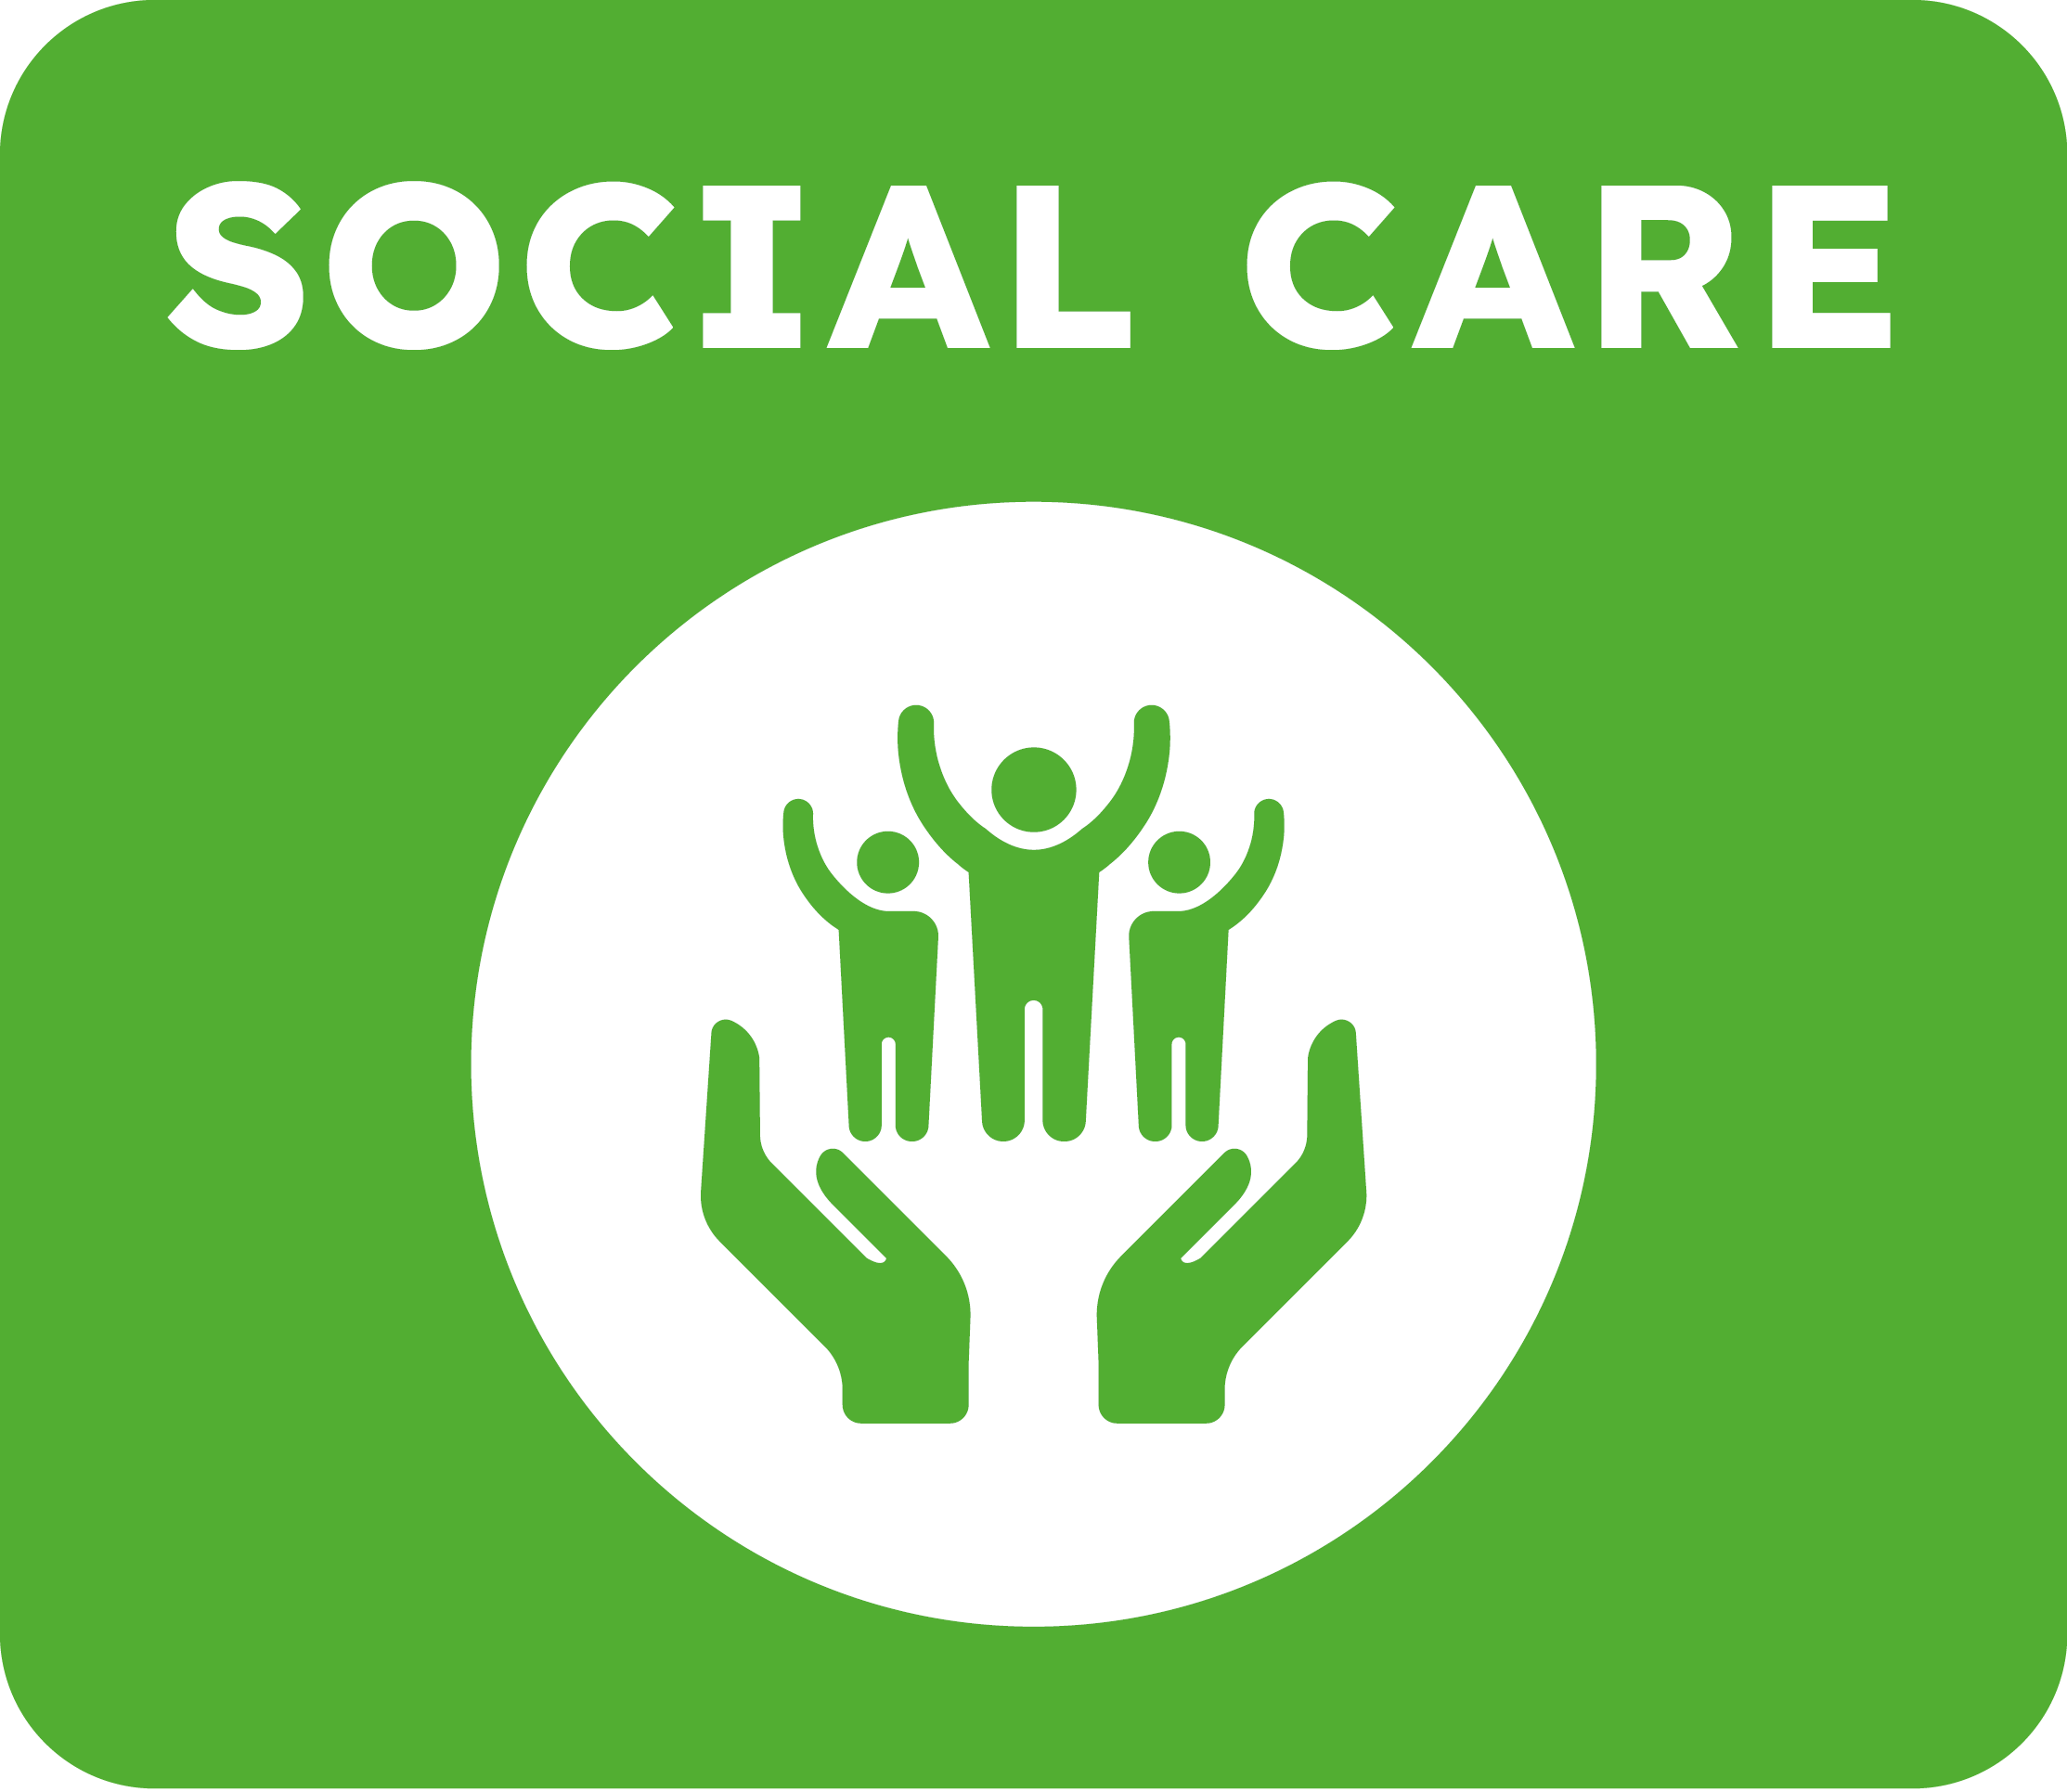 Social care